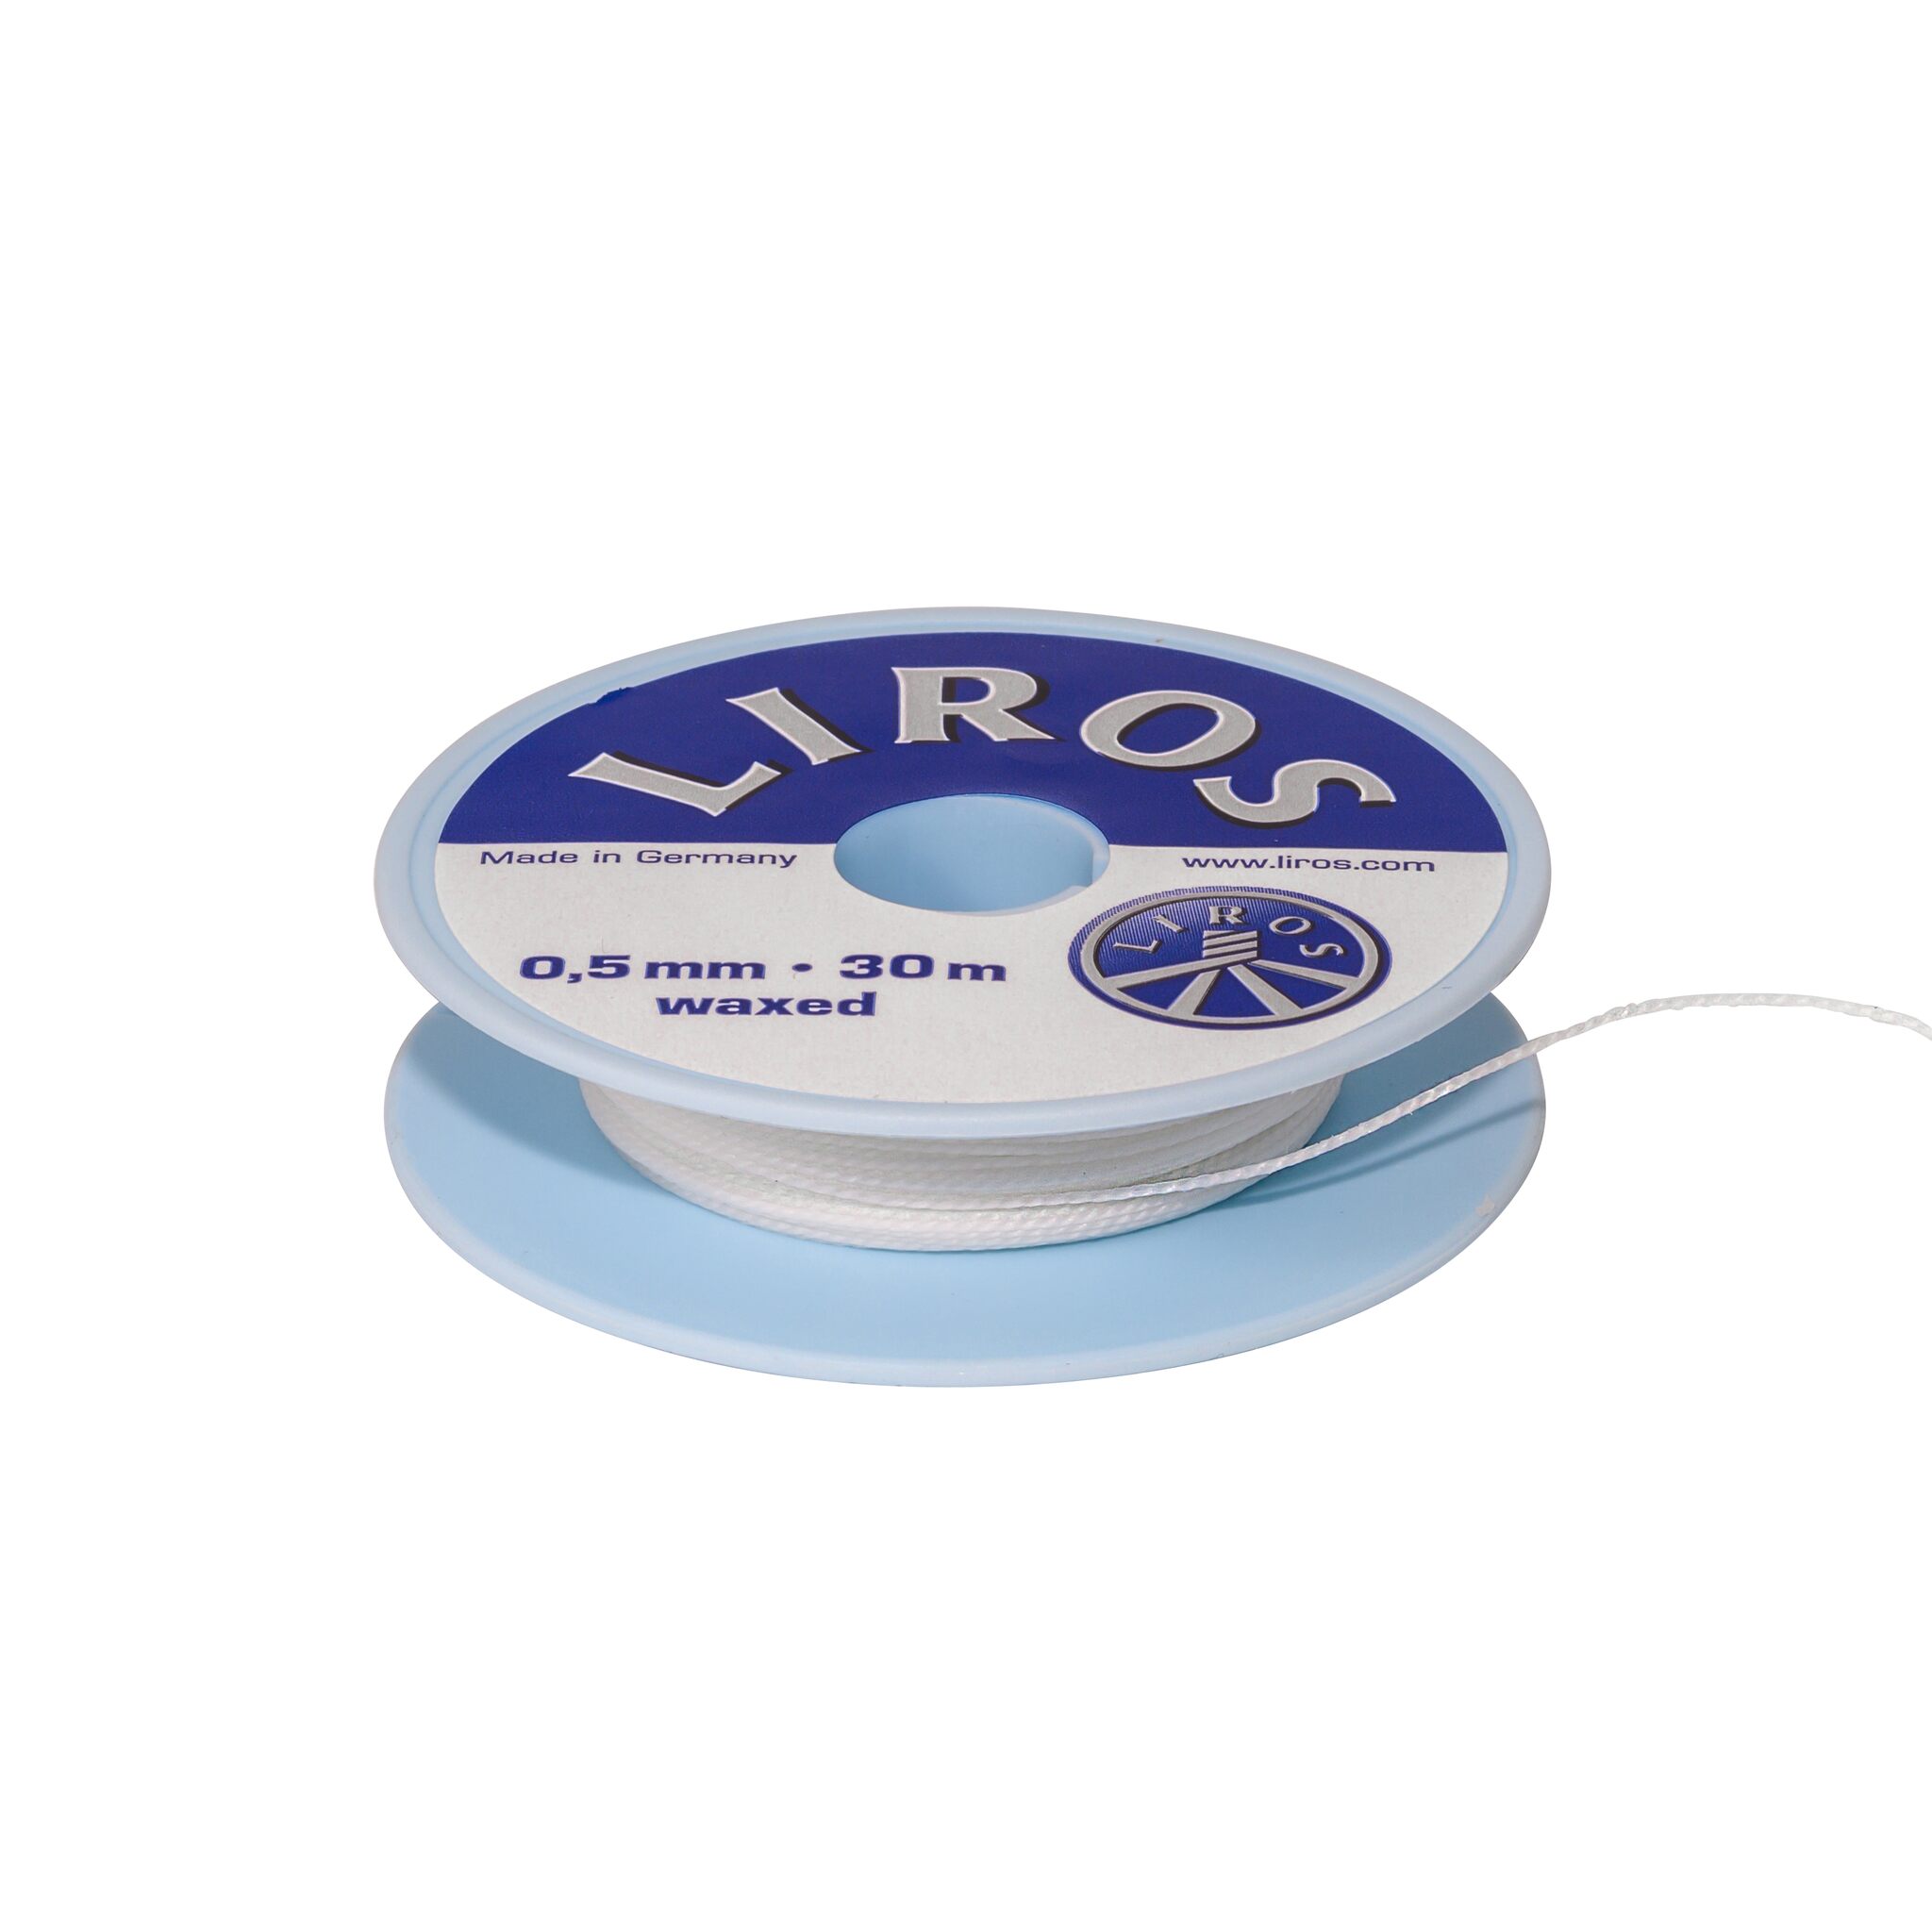 LIROS Rigging and Tying Yarn, 0.5 and 1.2 mm diameter